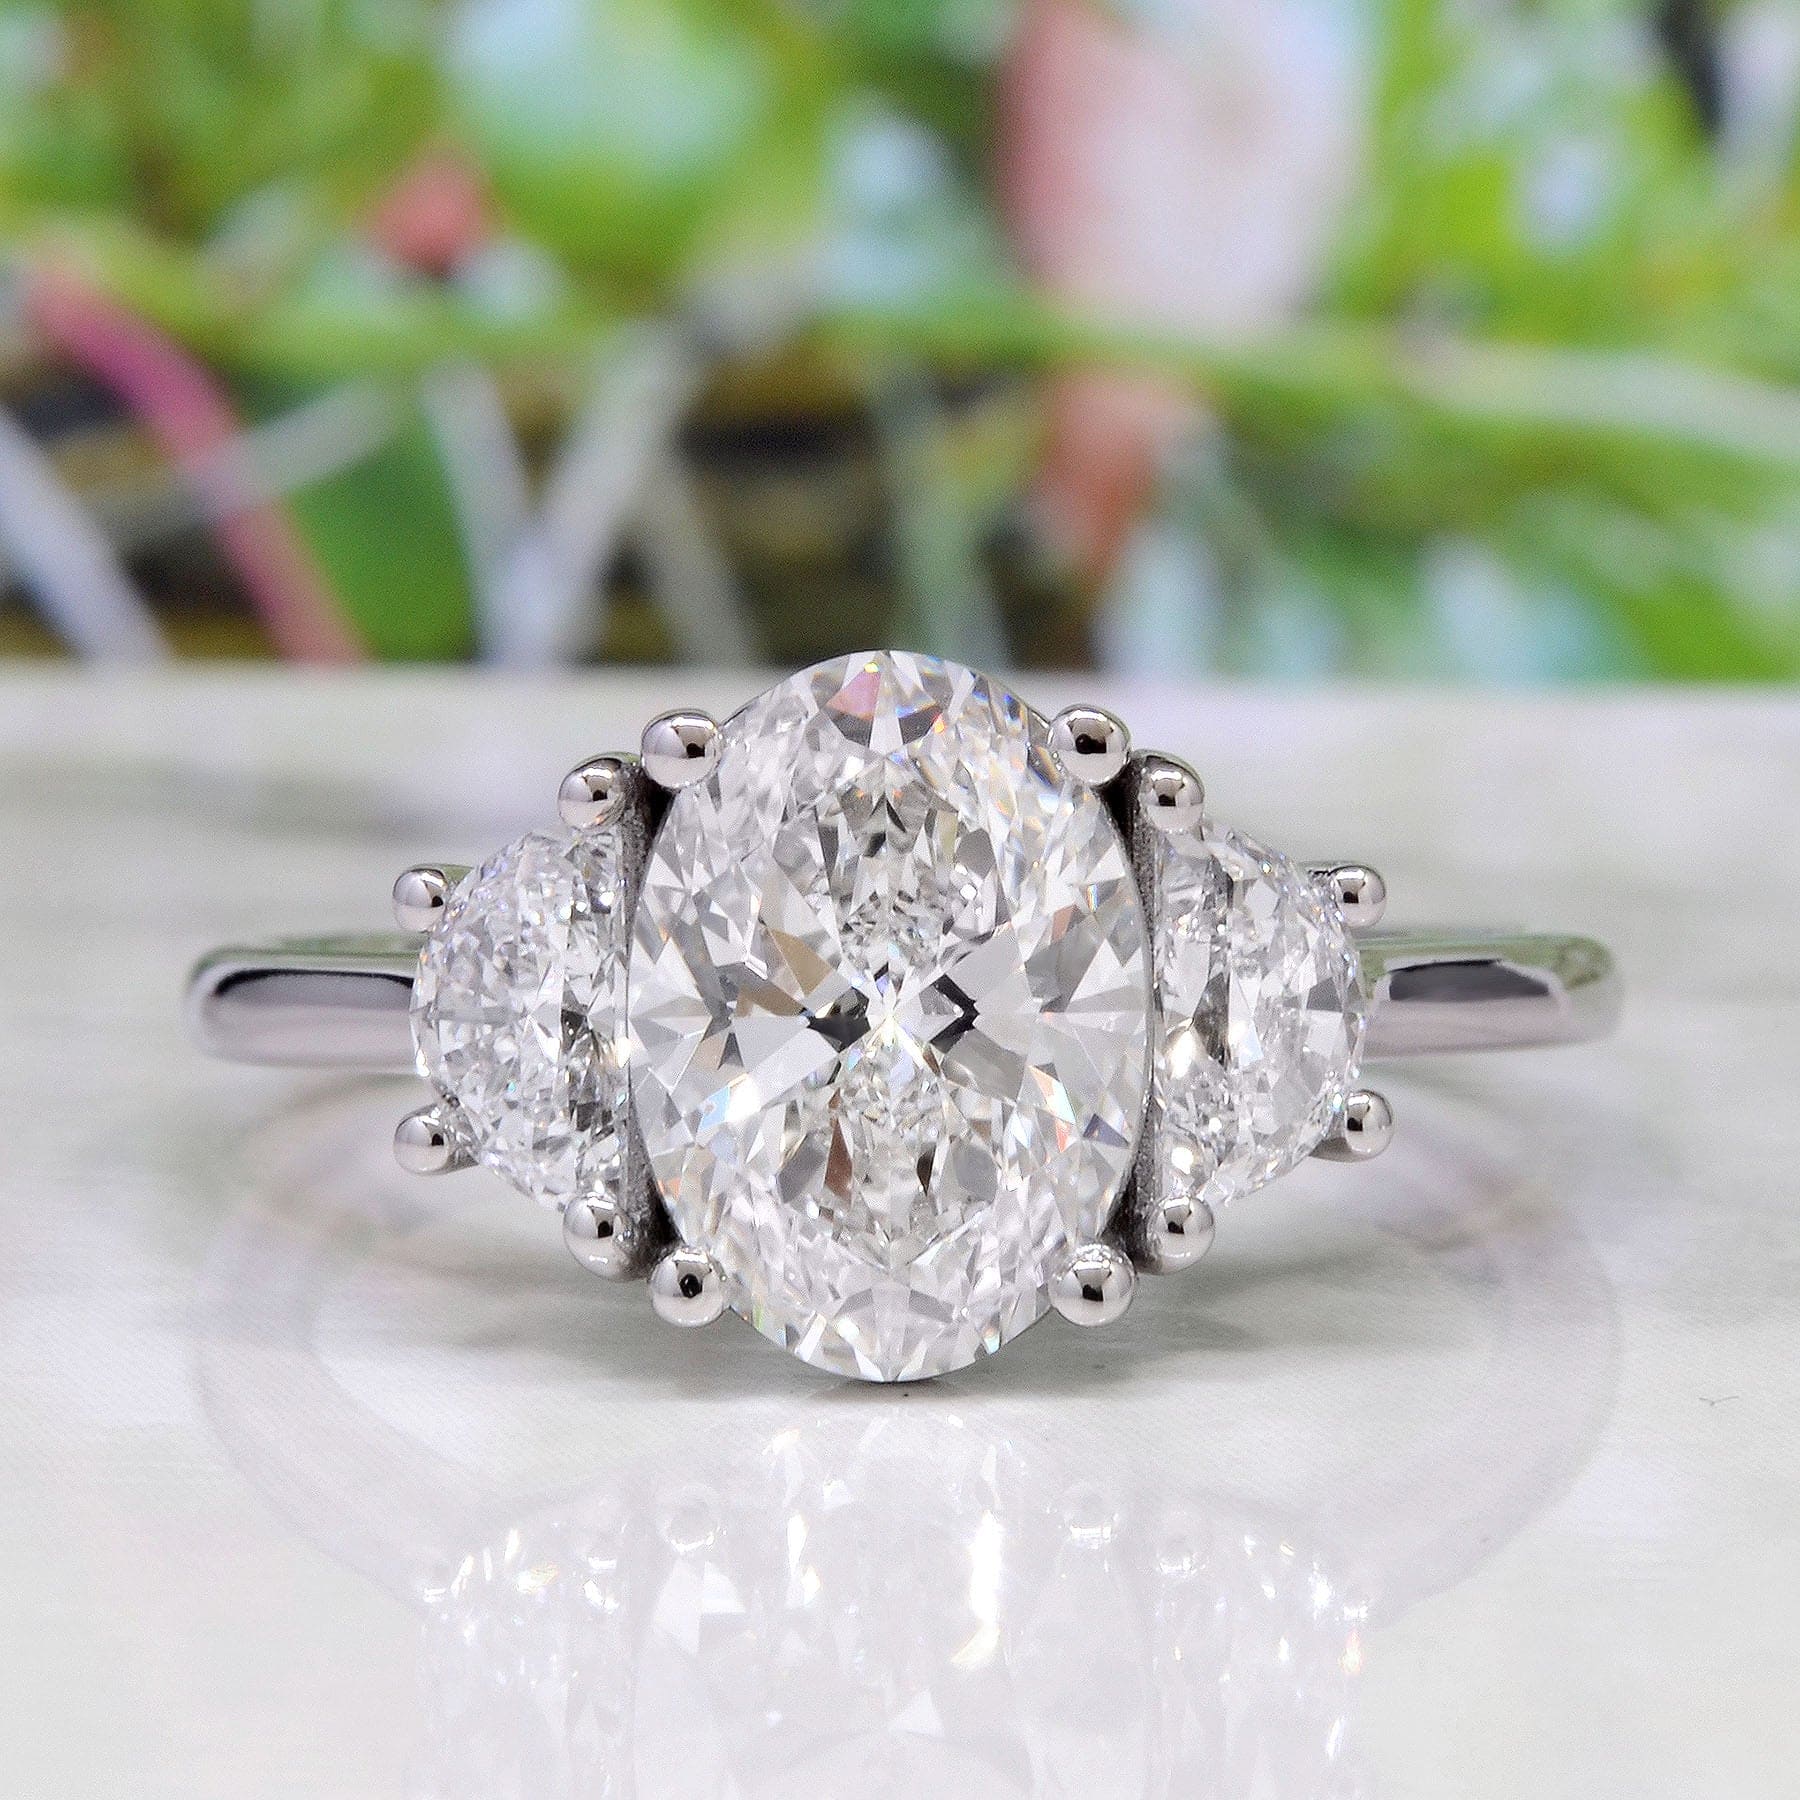 NIshi - Diamond and Rose Cut Sapphire / 3 Stone Ring - Fitzgerald Jewelry